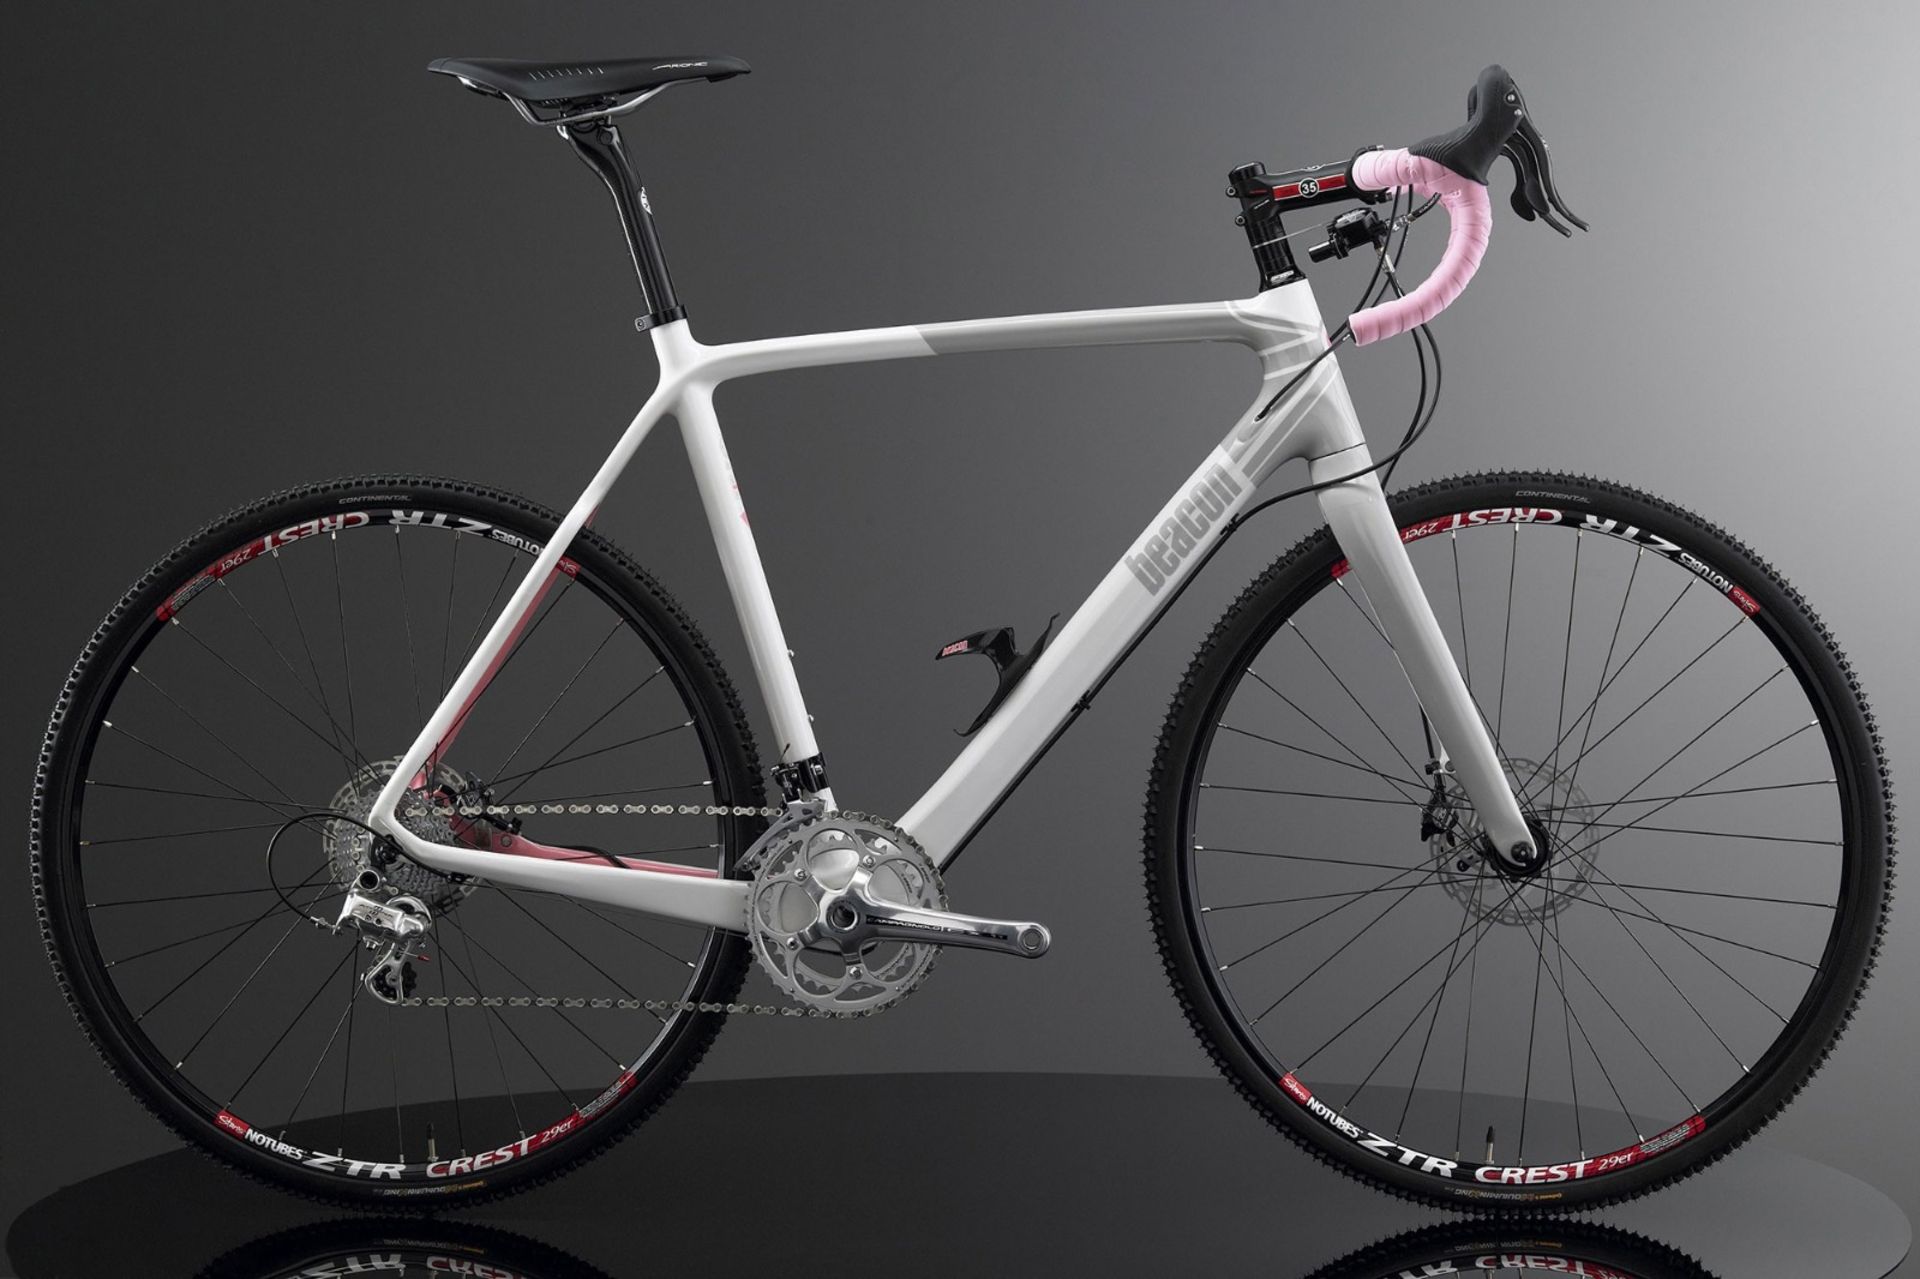 1 x Beacon Model BF-45, Size 540, Carbon Fibre Bike Frame in White & Grey. - Image 2 of 3